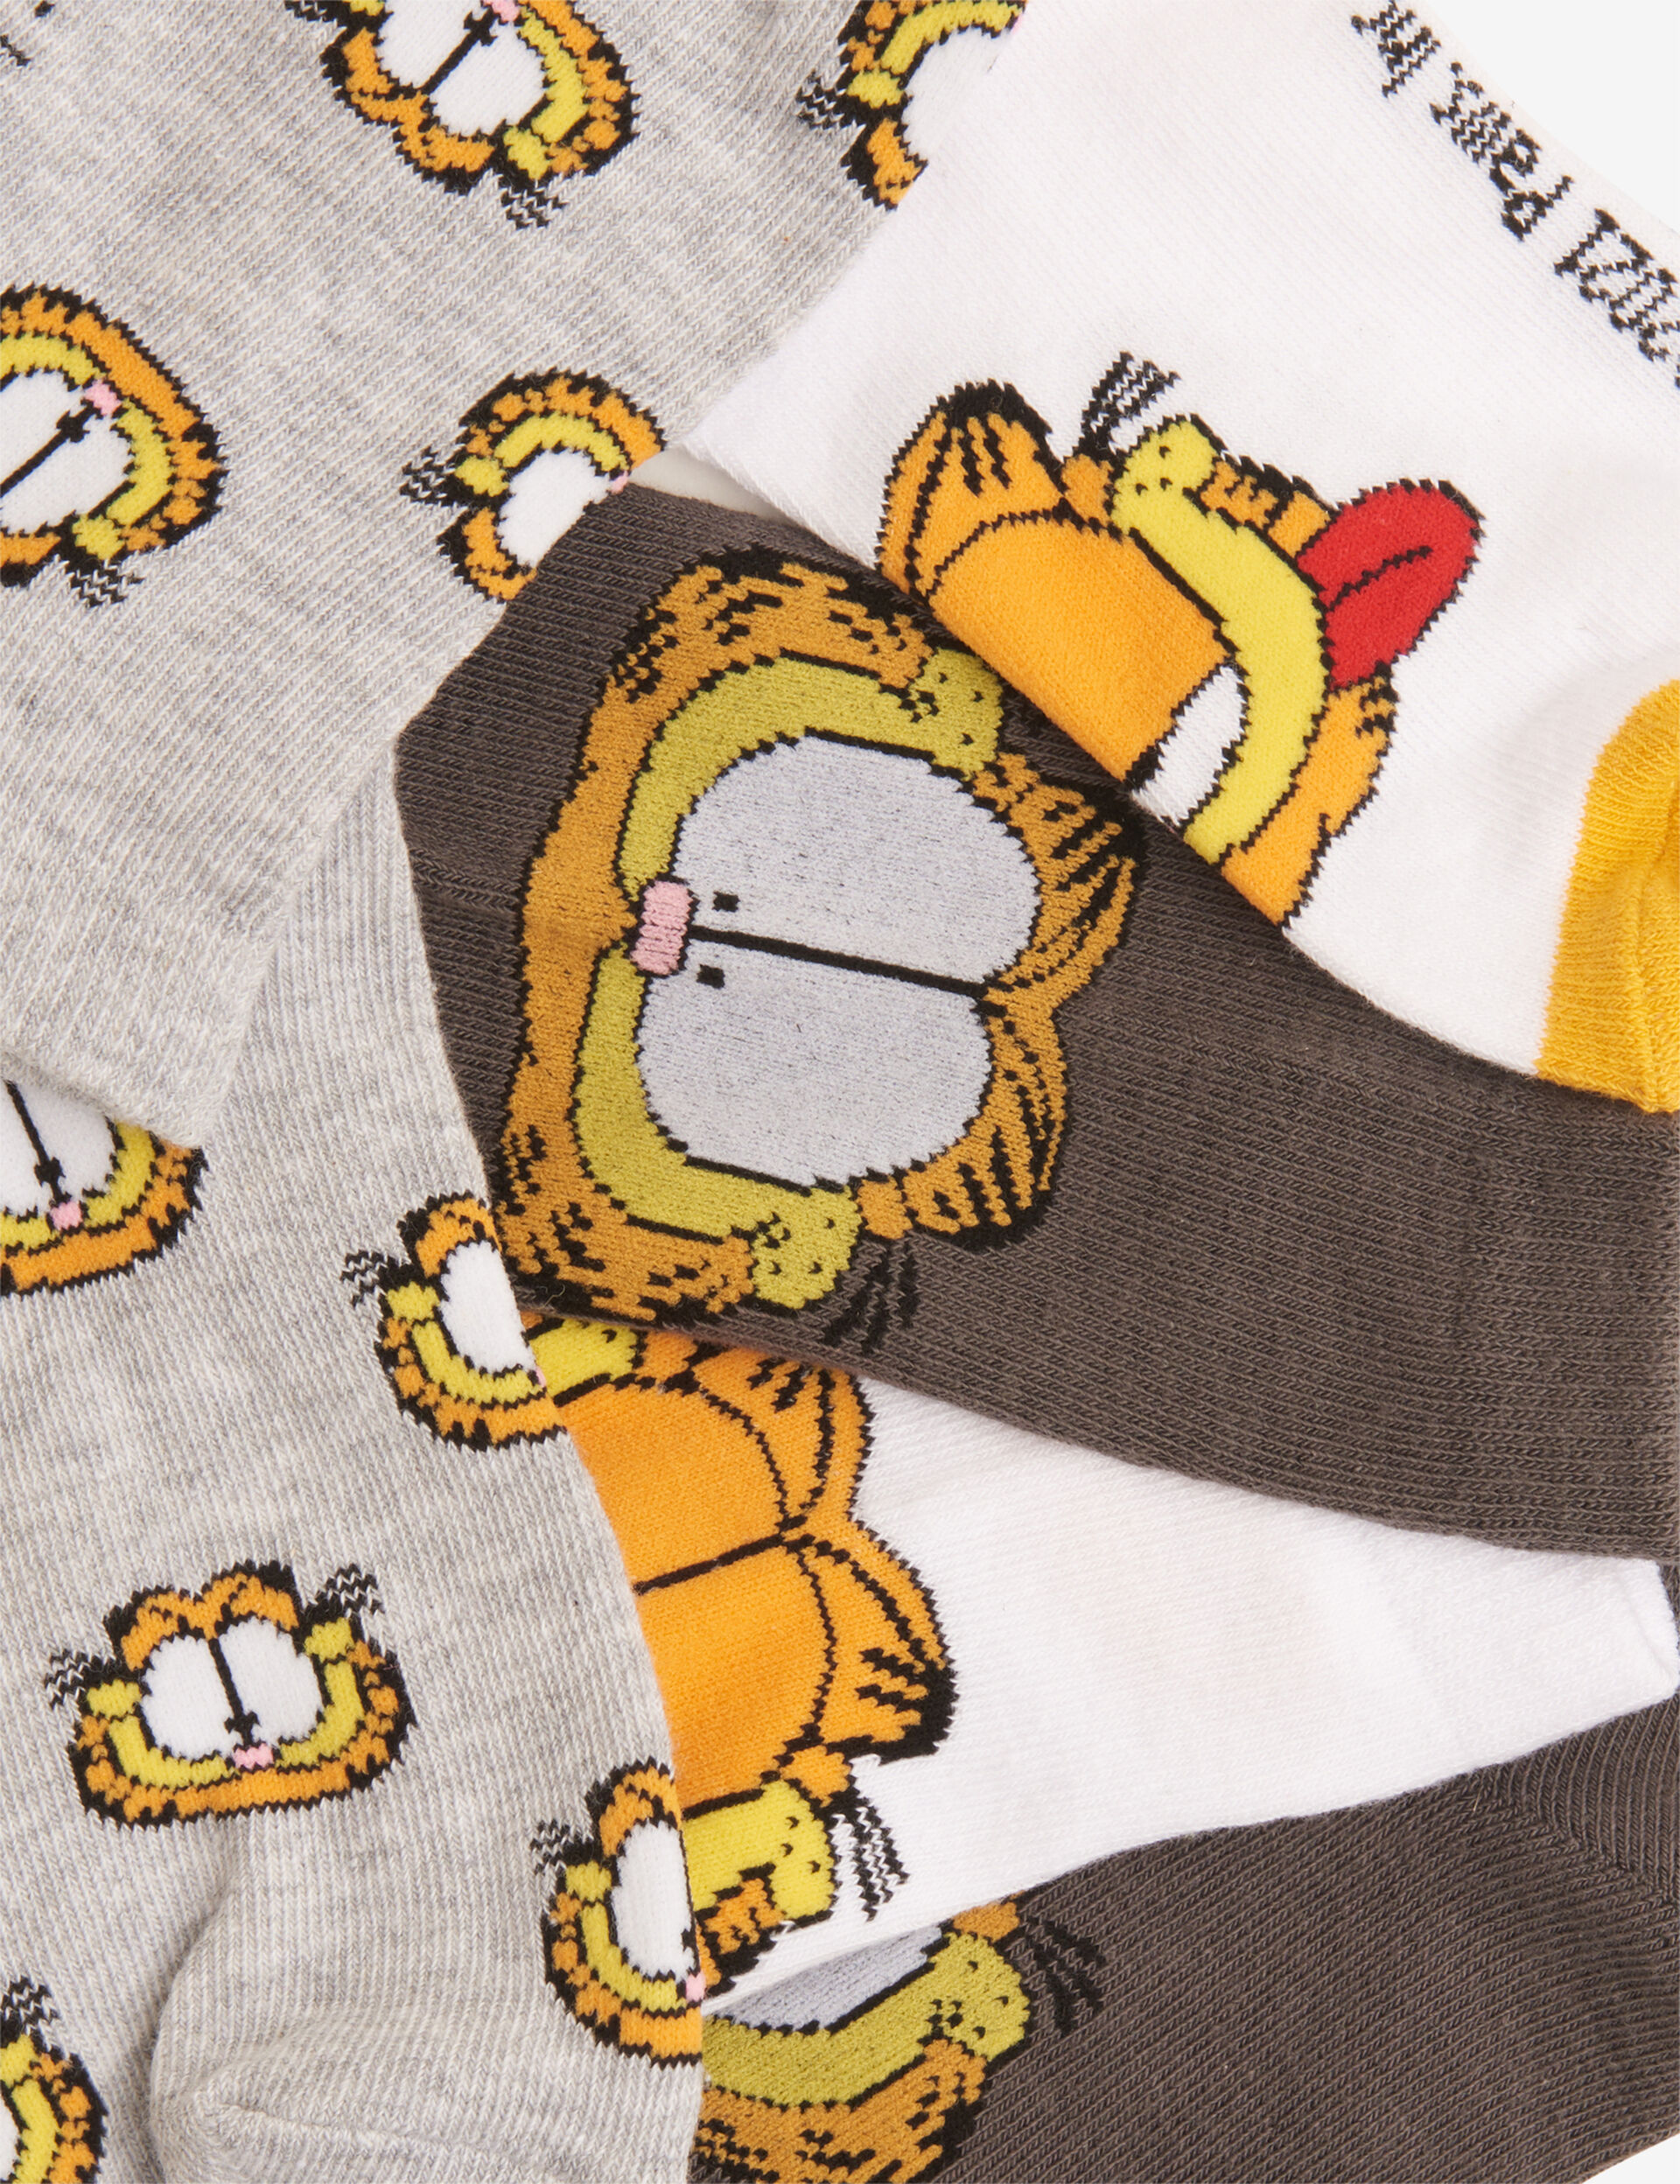 Garfield socks